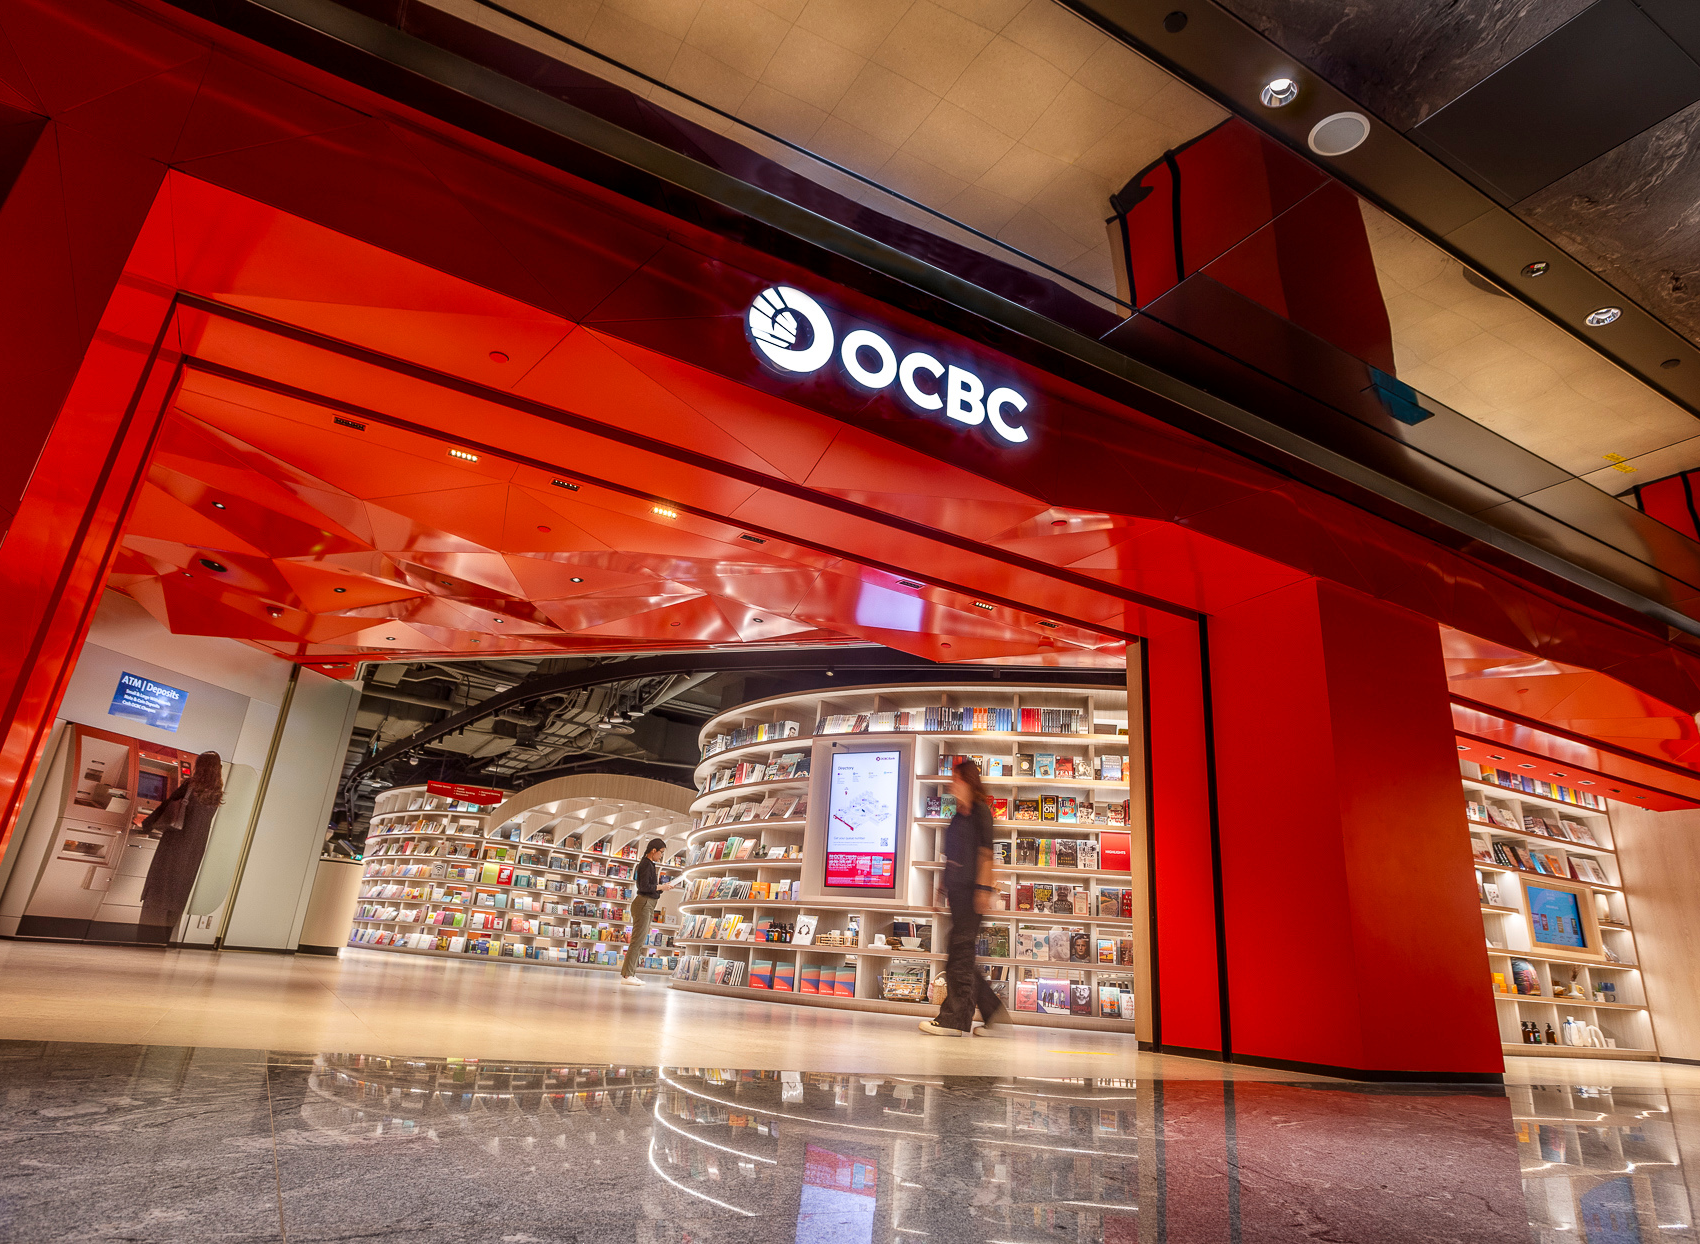 OCBC-Bank